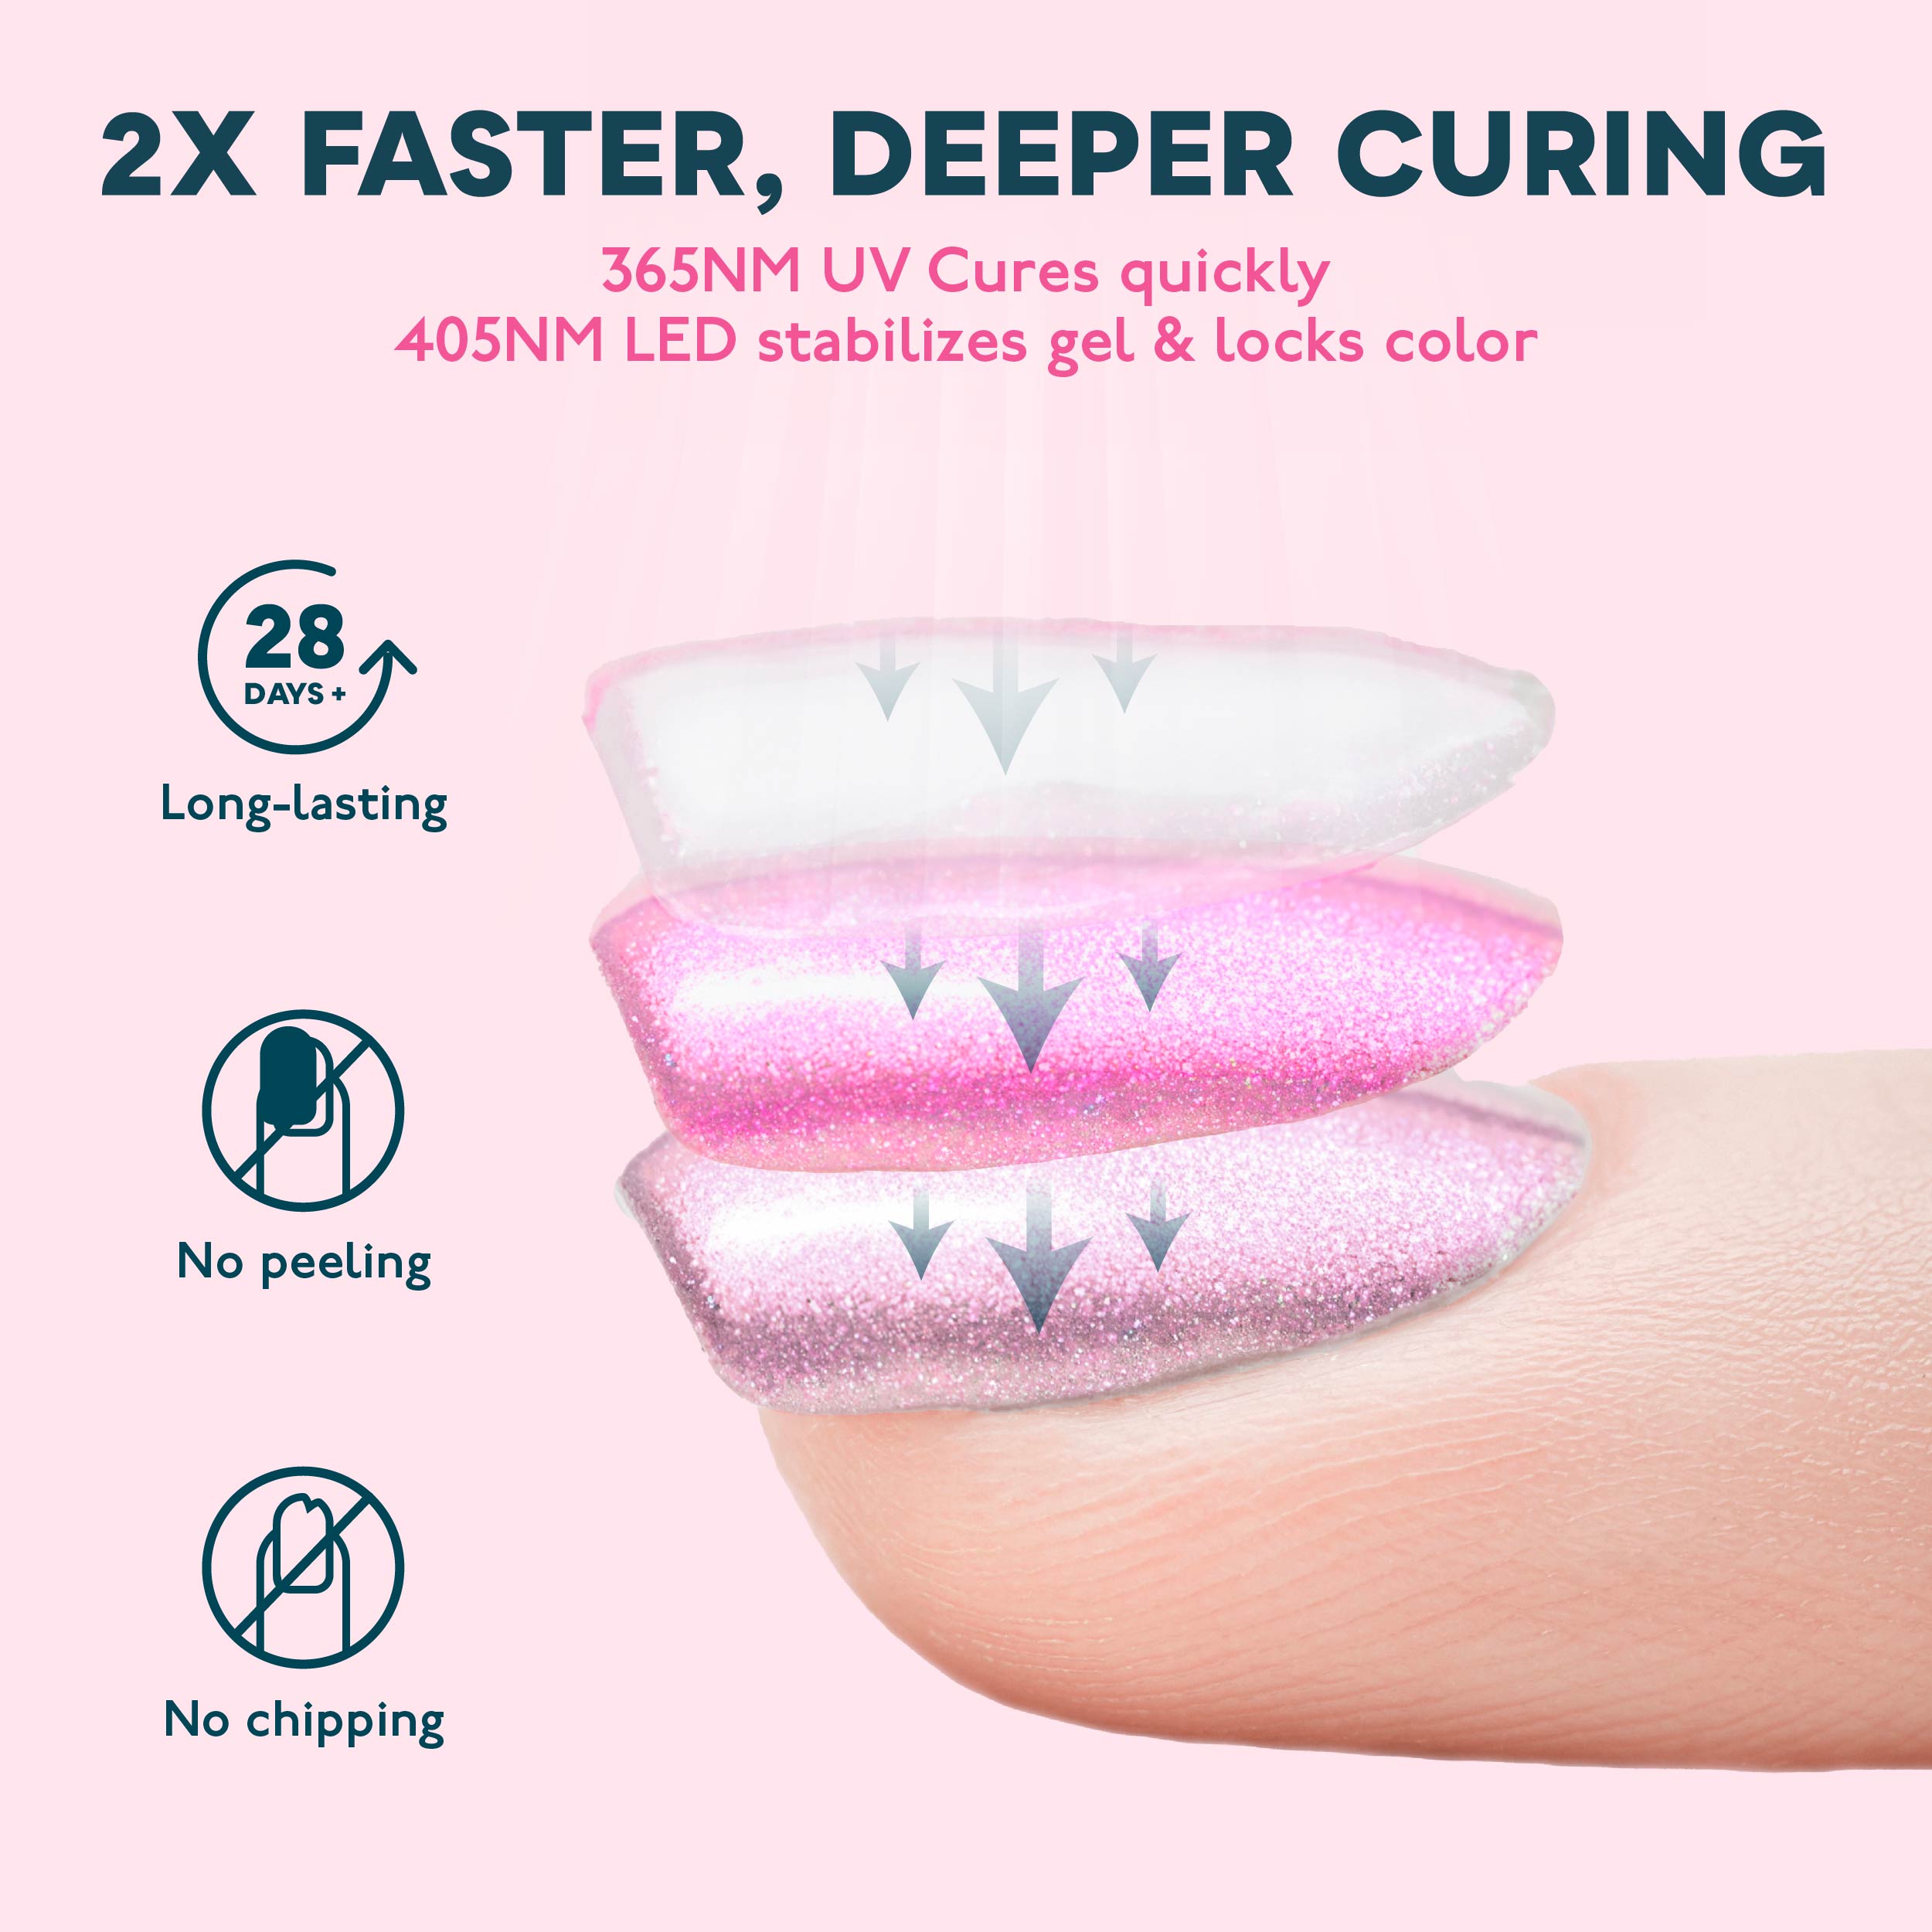 Sun3 UV LED Nail Lamp: Salon-Quality Nail Care at Home